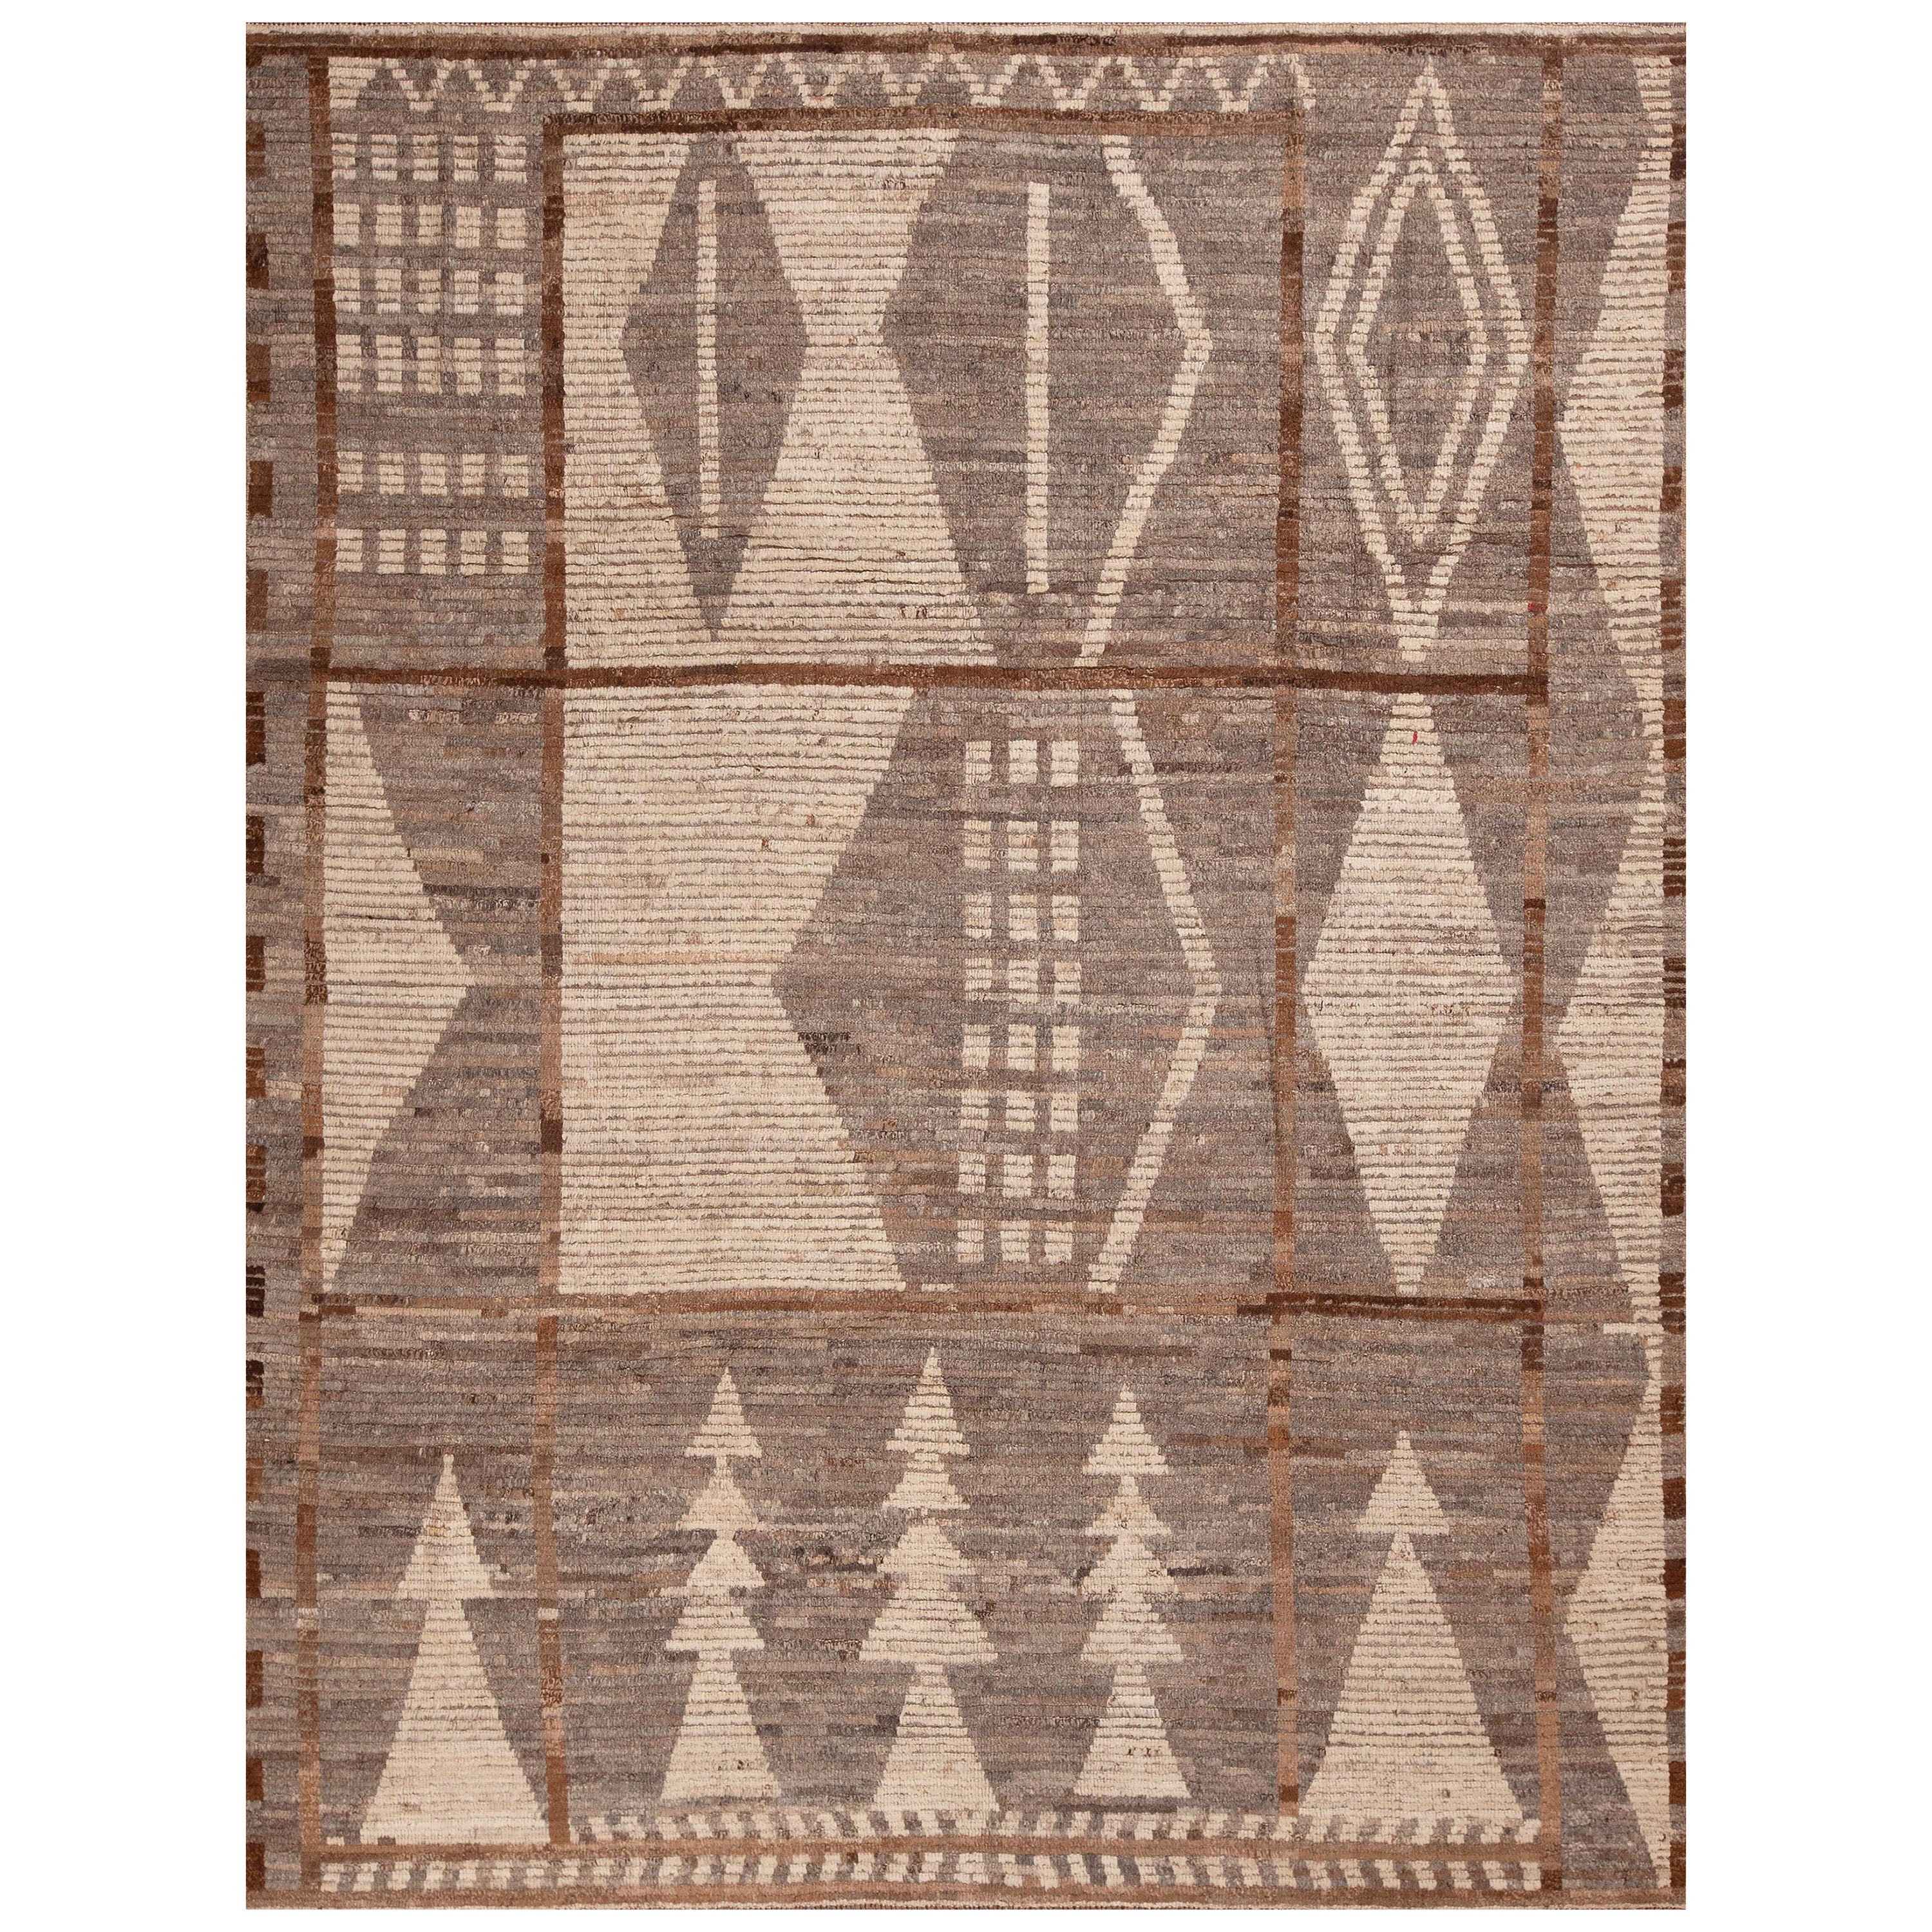 Nazmiyal Collection Earthy & Brown Tribal Geometric Design Area Rug 7'3" x 9'5" For Sale